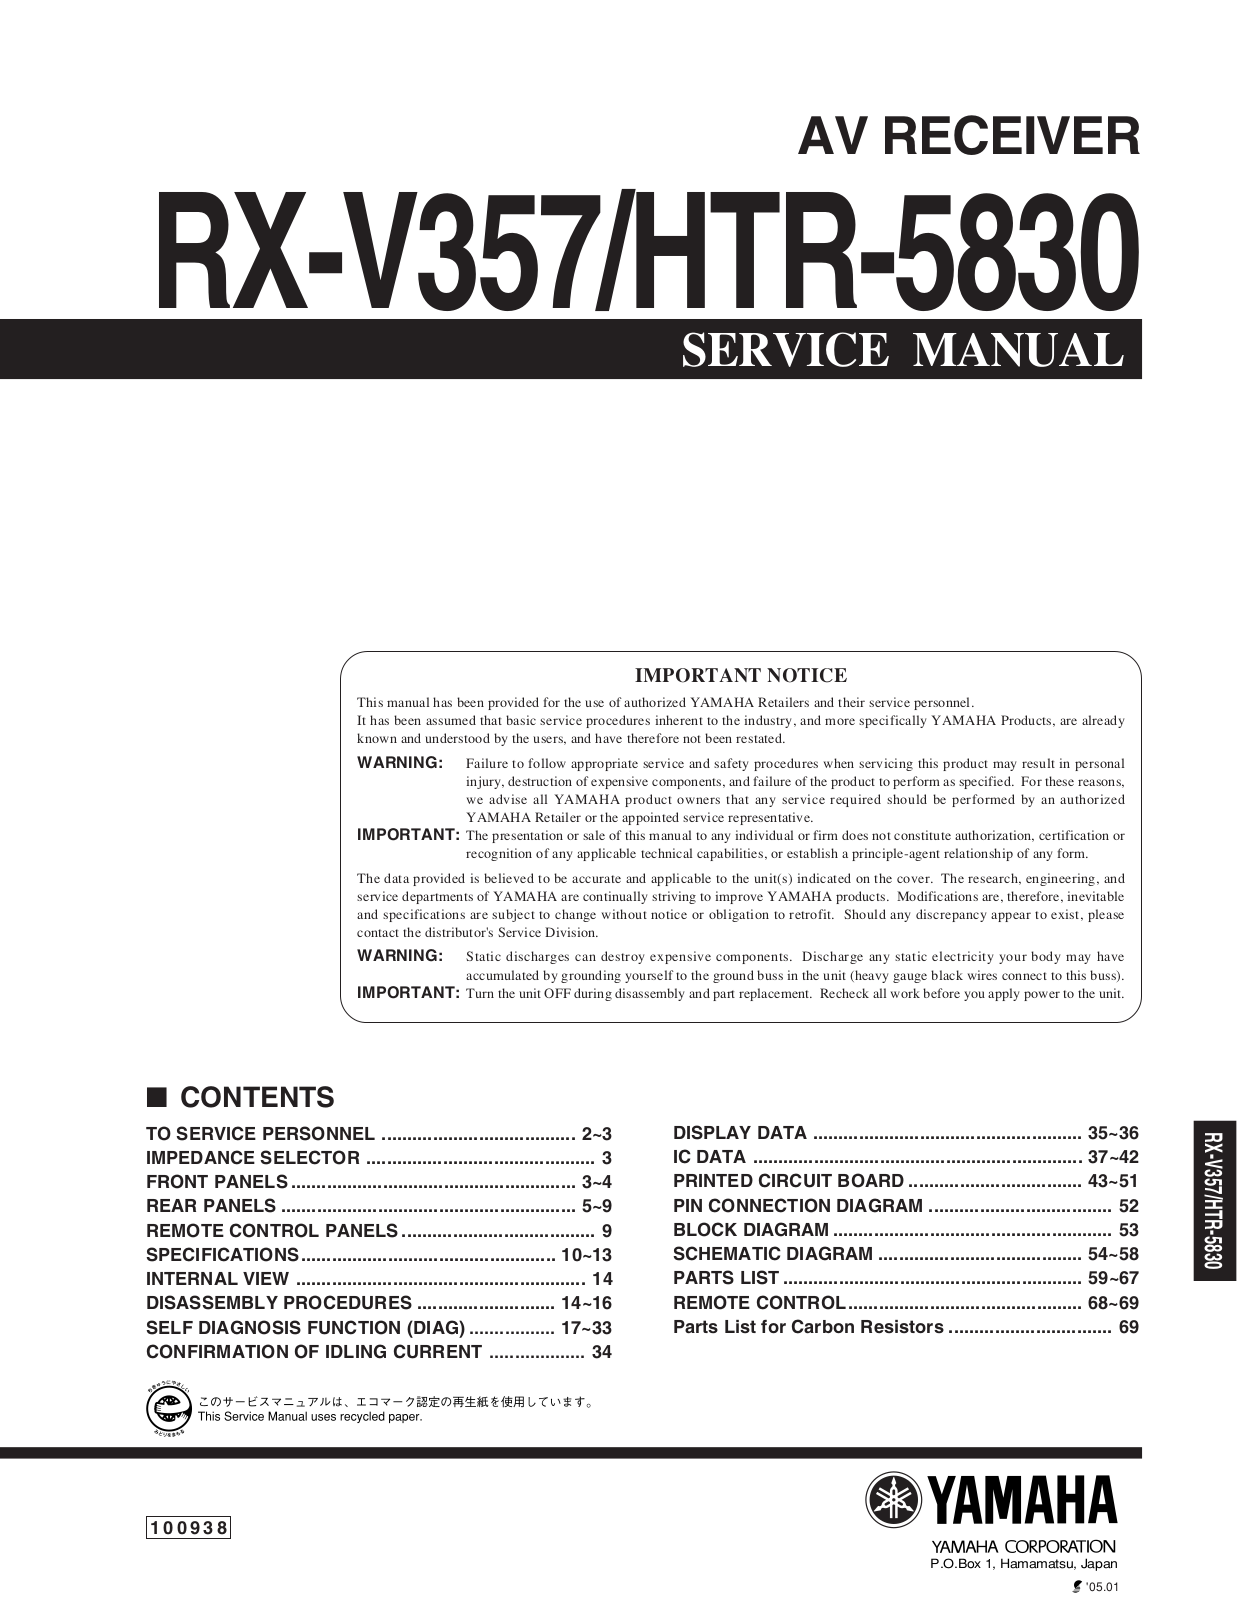 Yamaha HTR-5830 Service manual